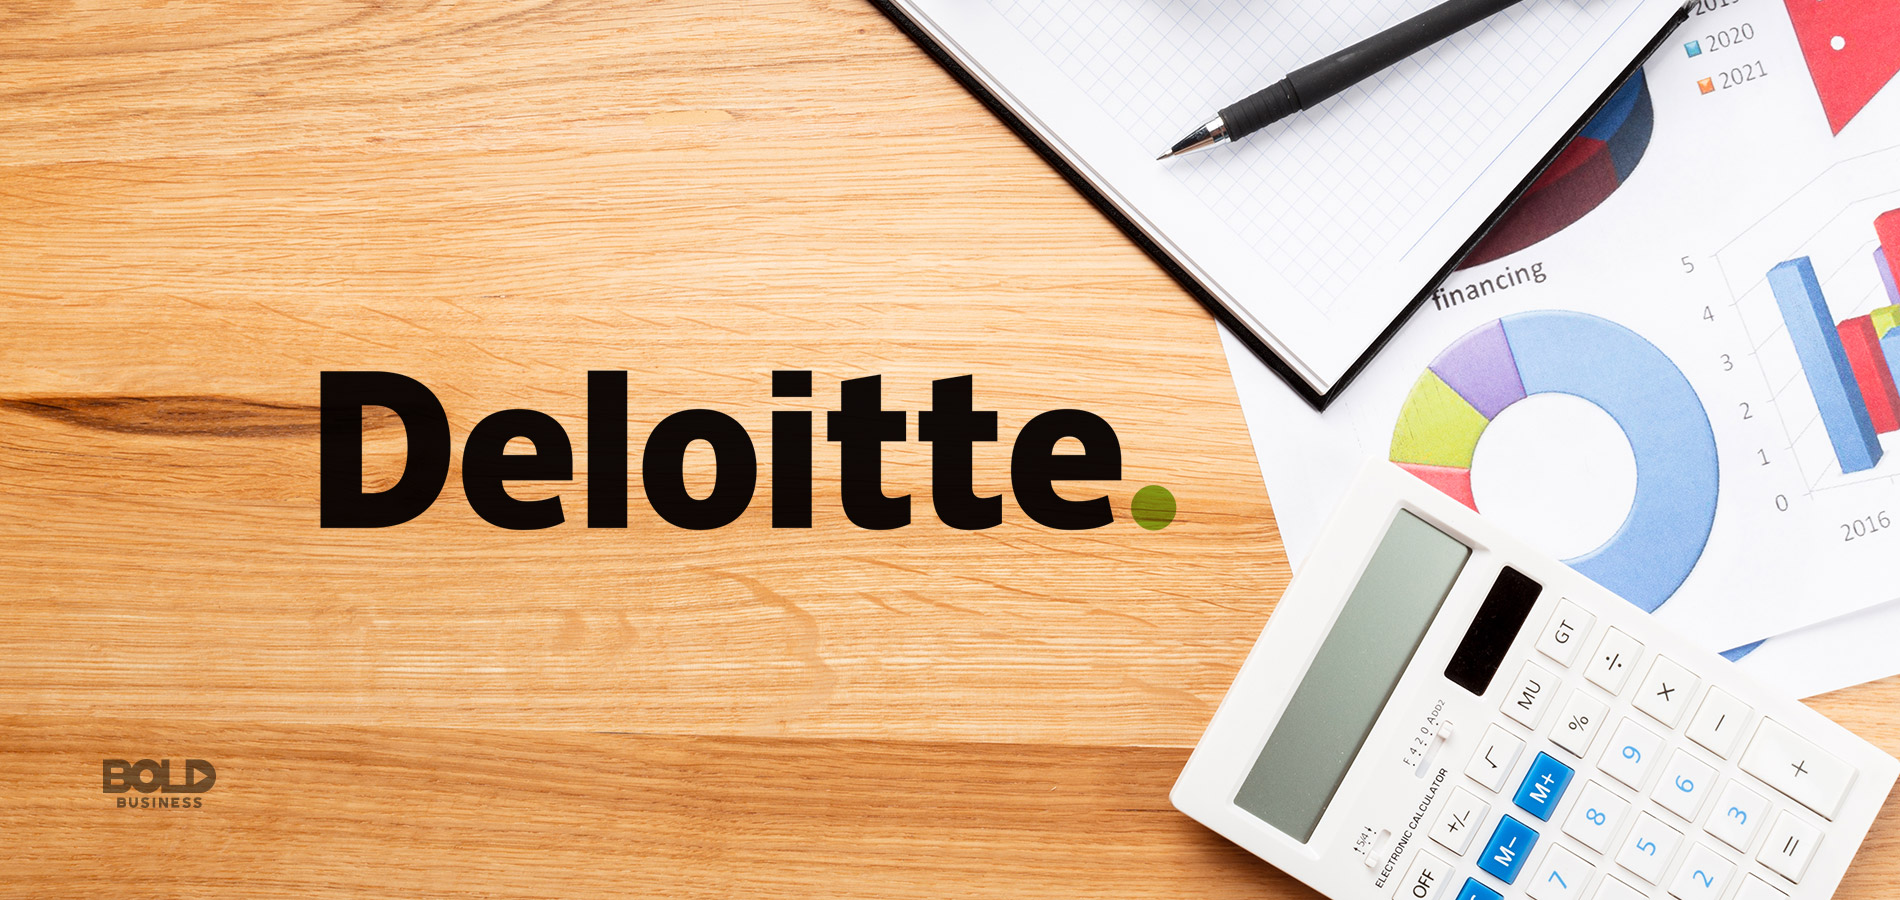 Deloitte WorldClass: A Business With Social Impact